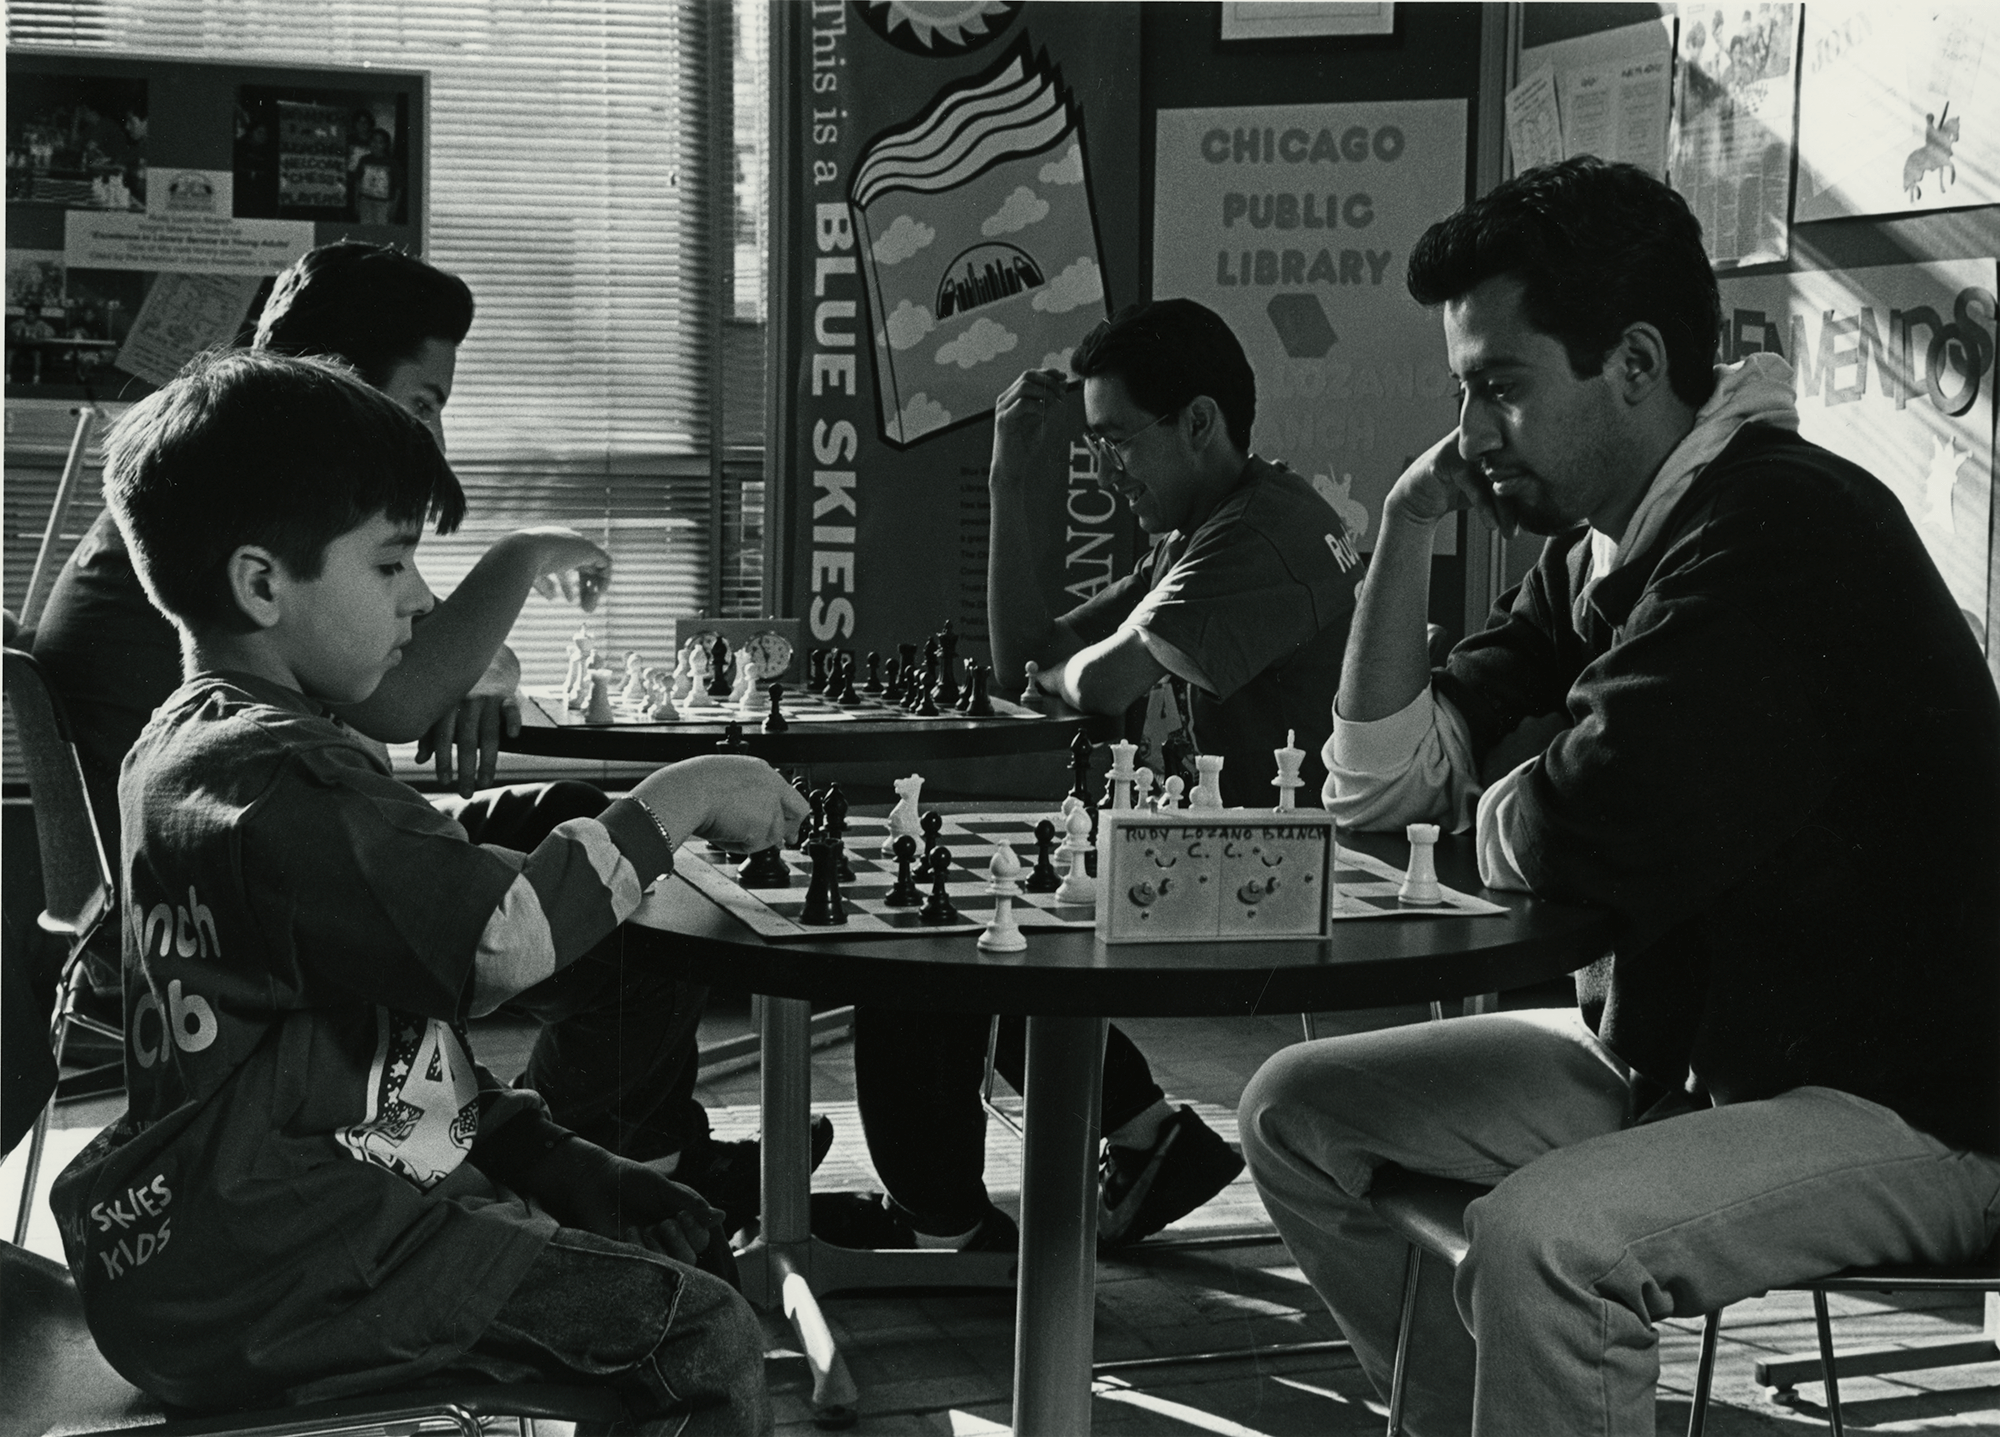 1997, chess club at Lozano Branch.